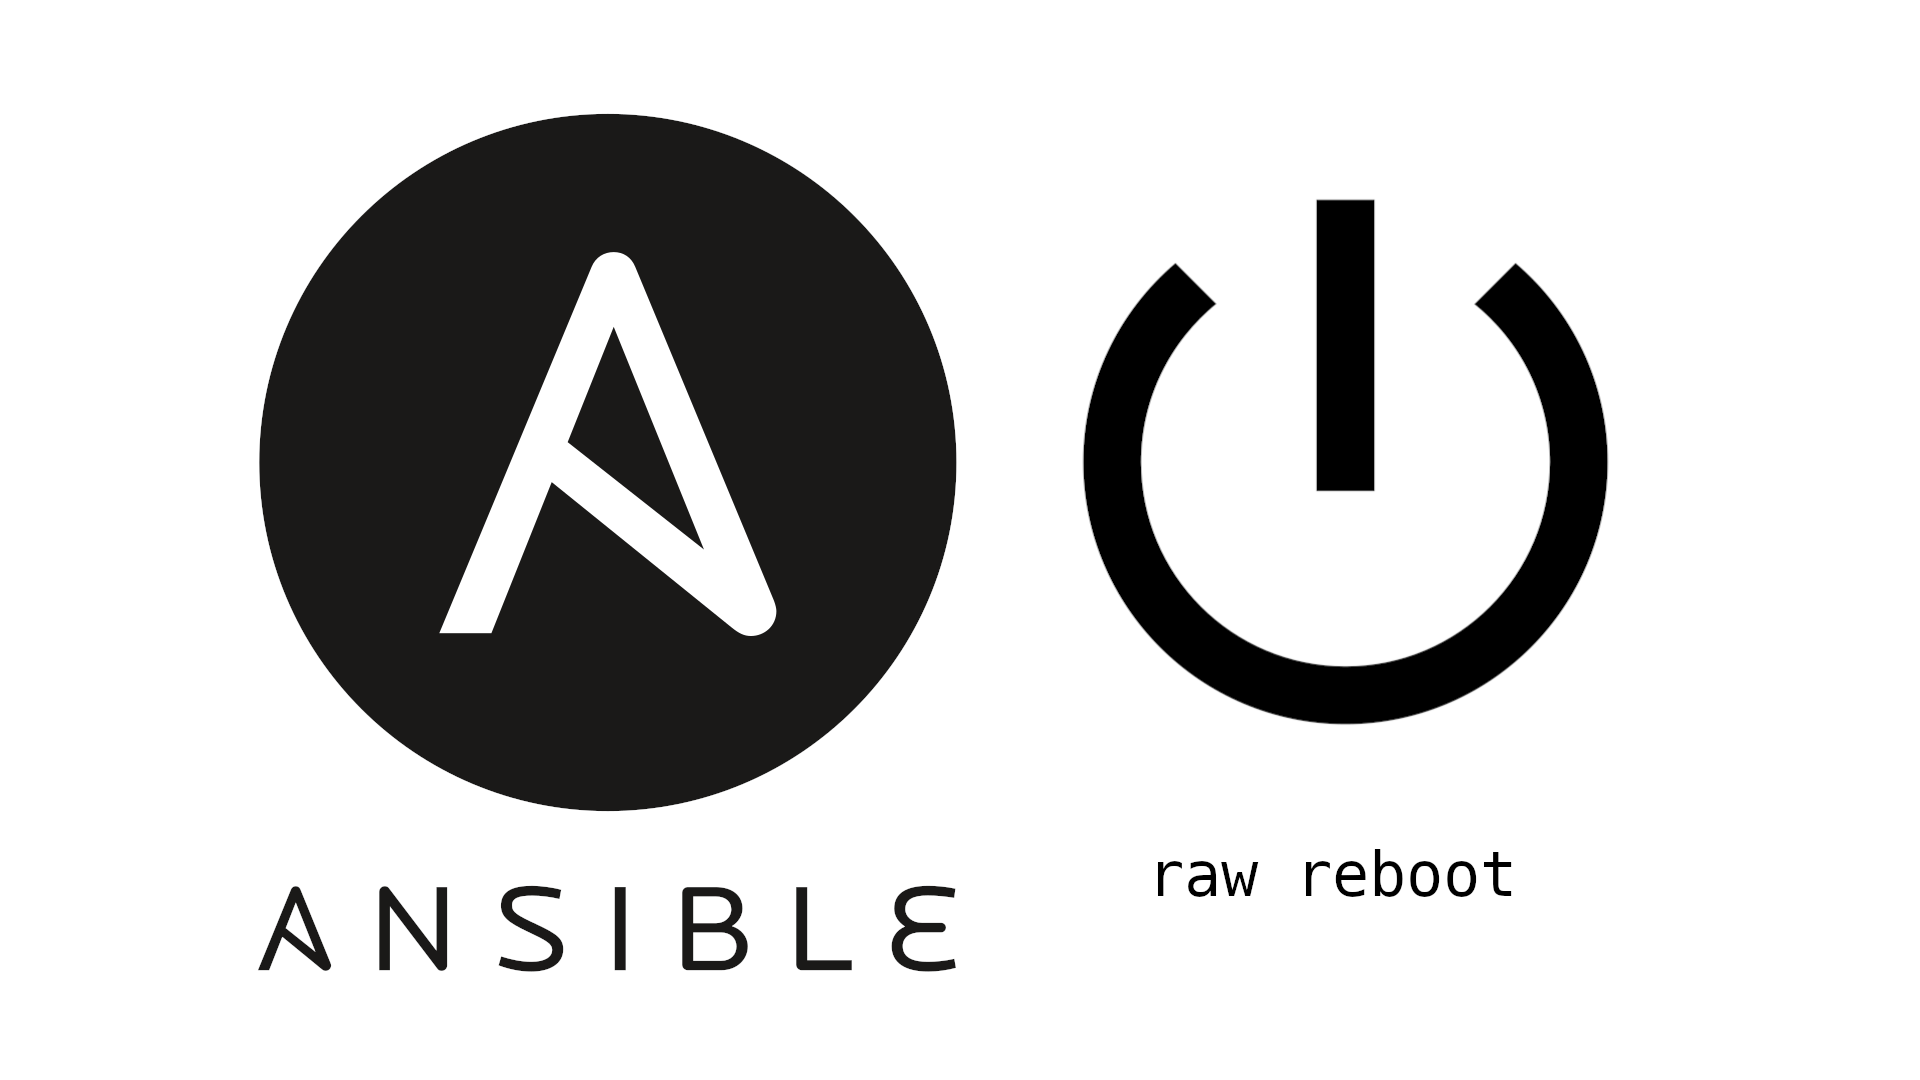 Ansible logo and power log